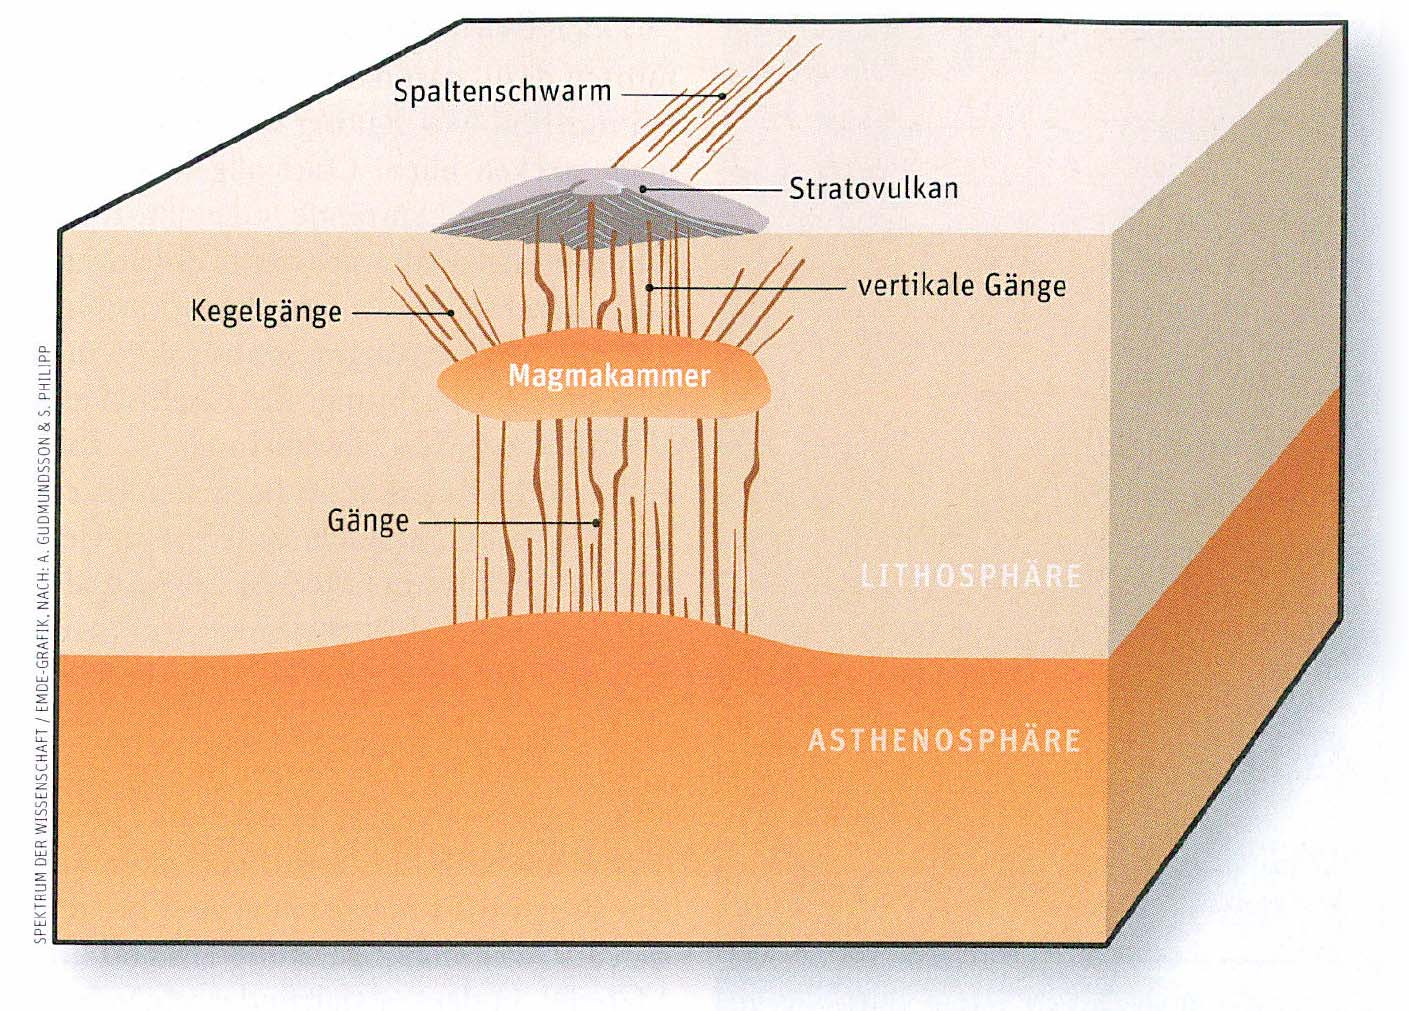 Magma chambers, dikes, and volcanoes